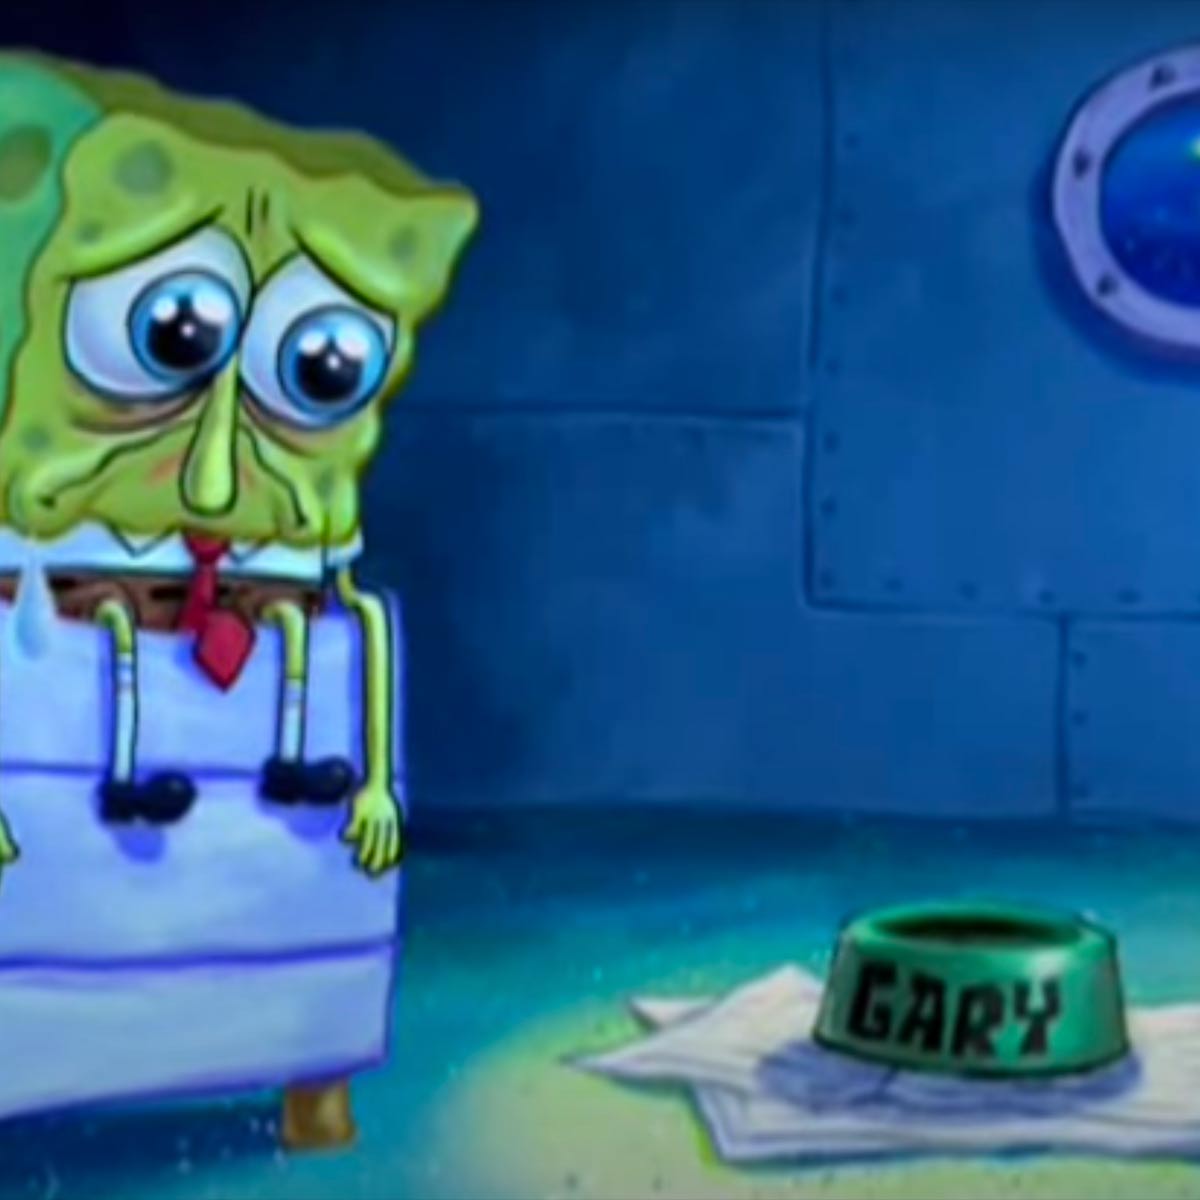 Spongebob Squarepants - Sad Song 